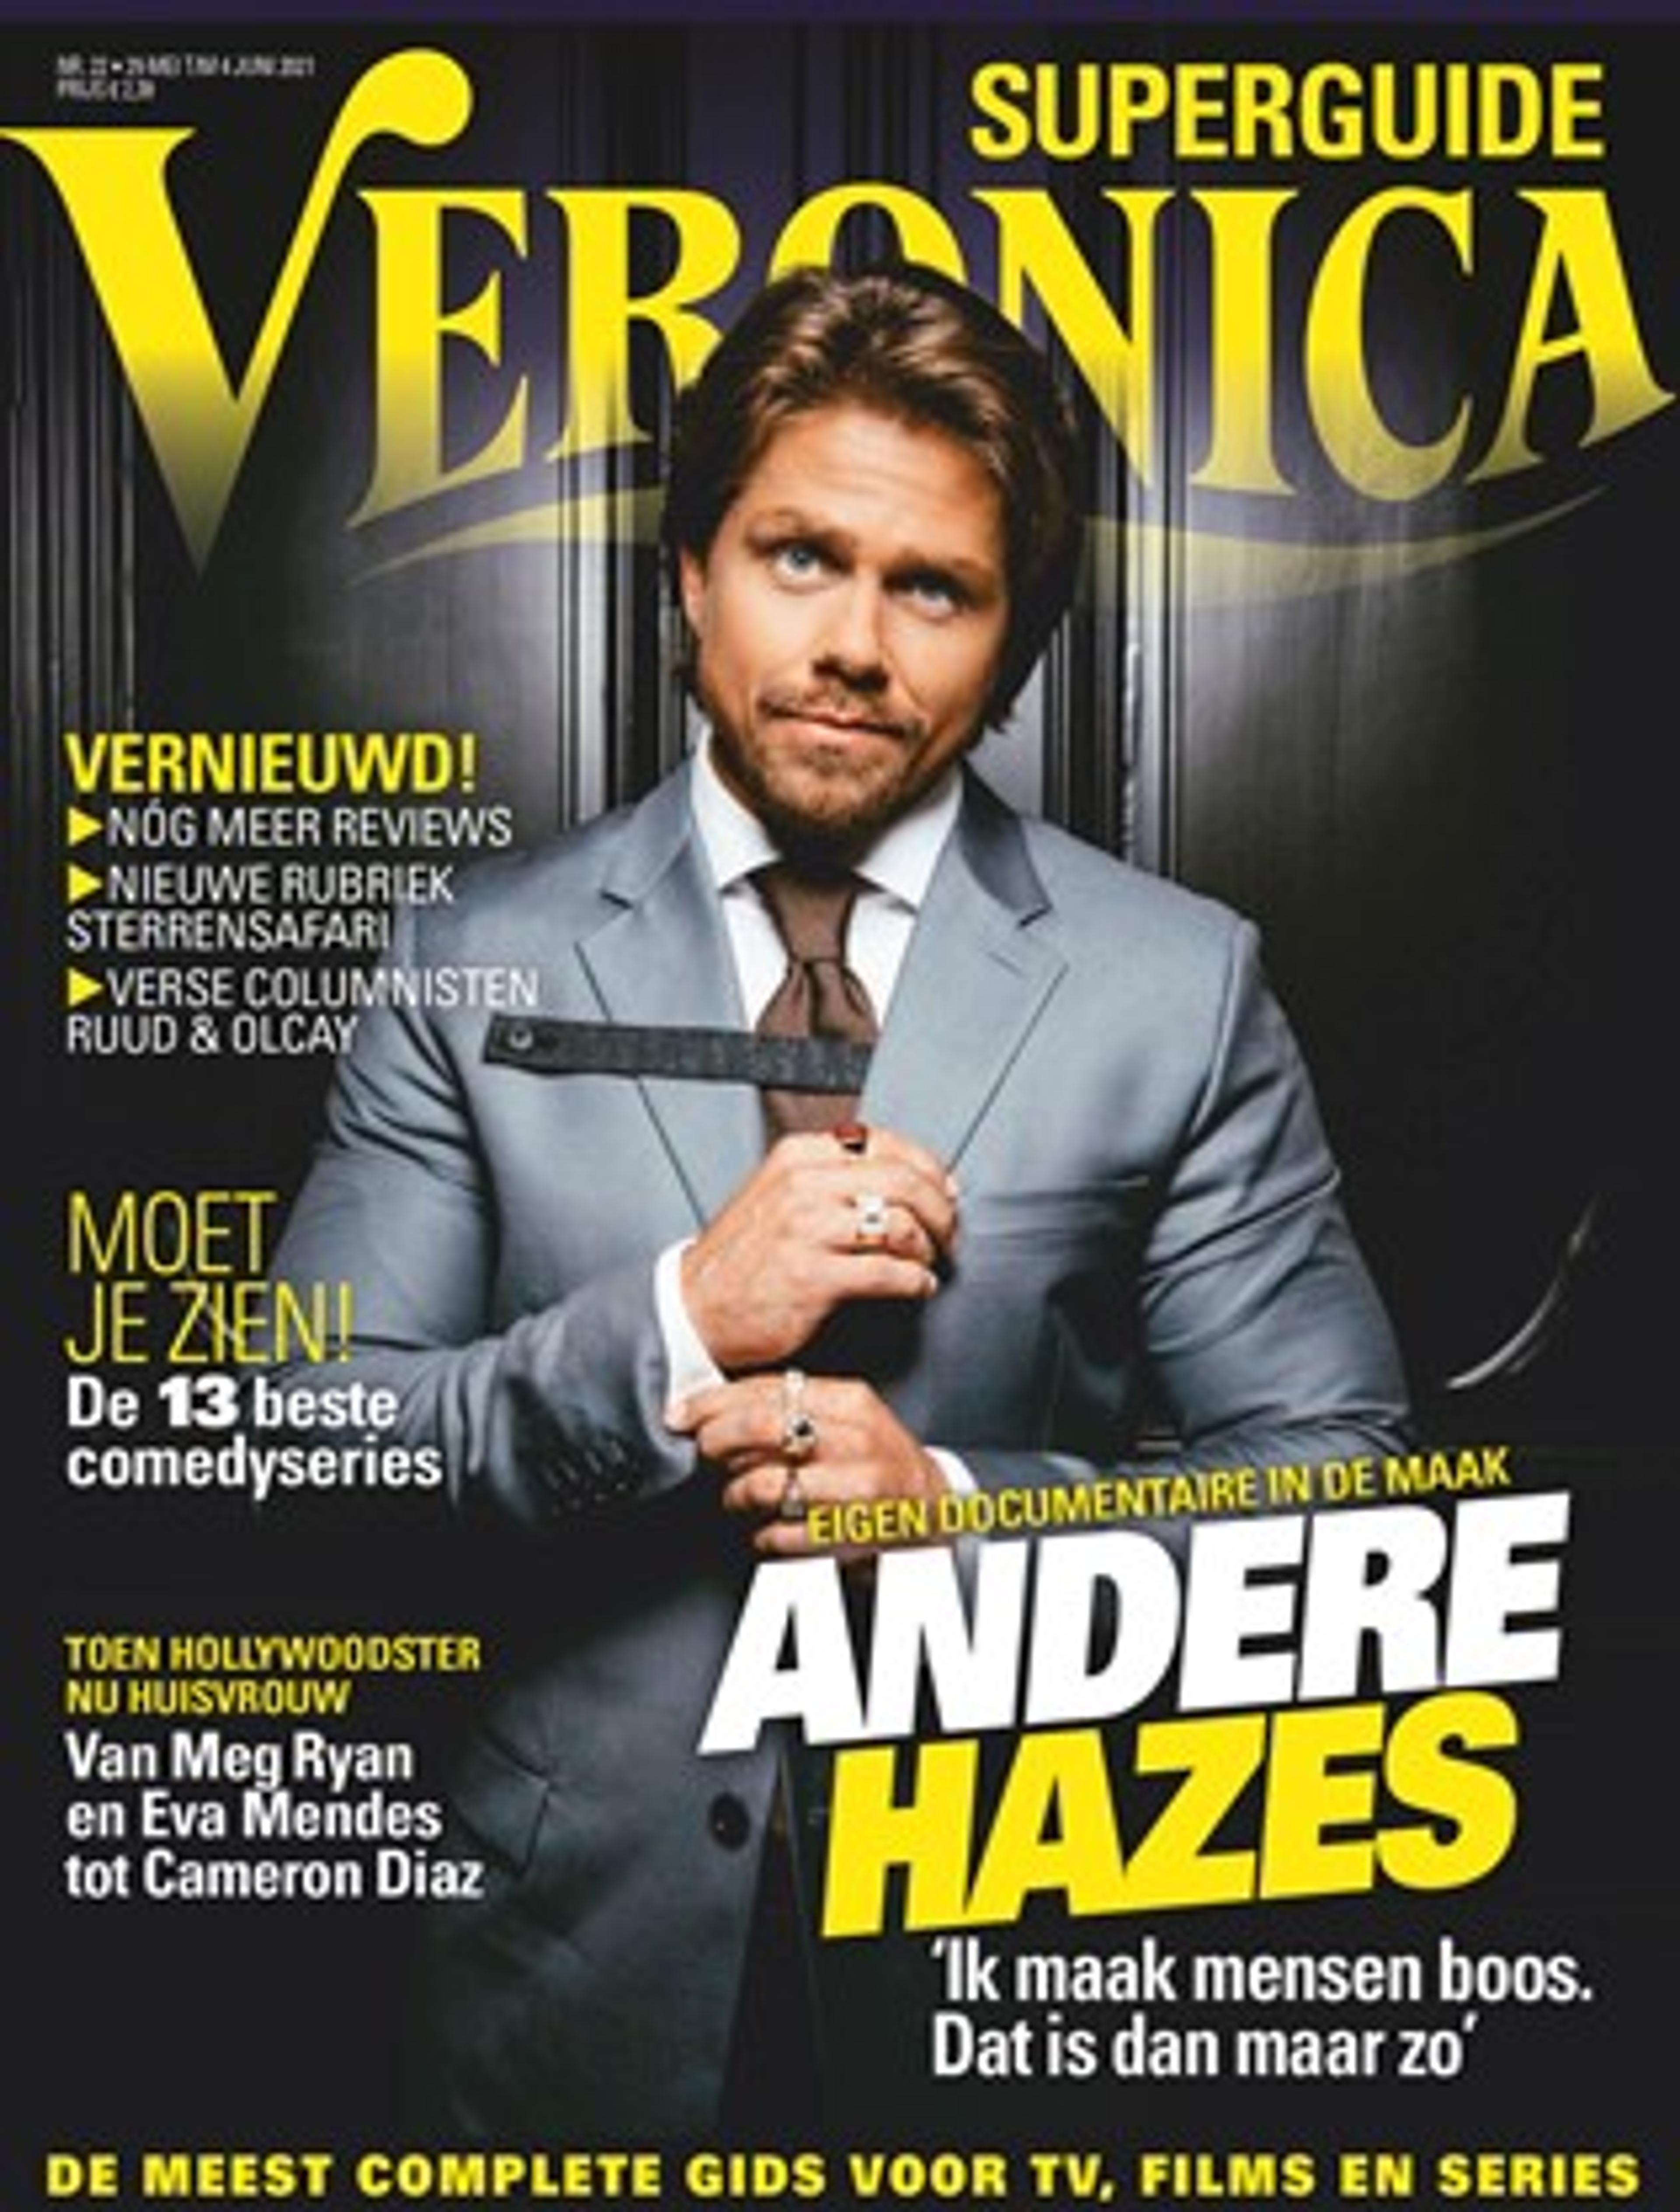 Veronica Magazine heet nu Veronica Superguide